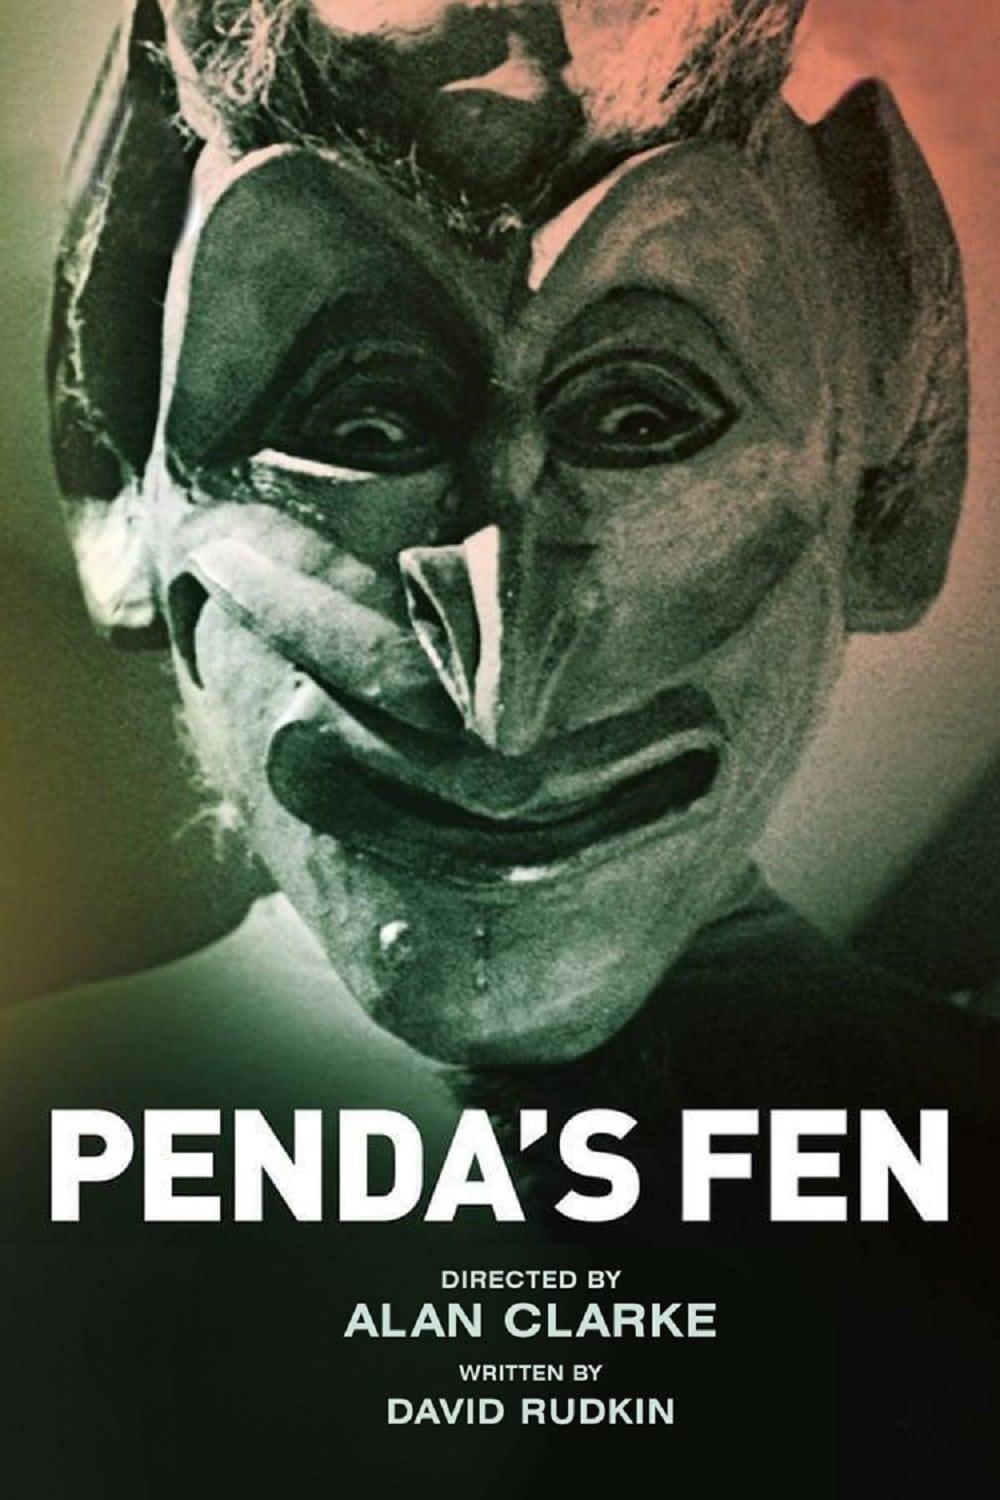 Penda's Fen poster